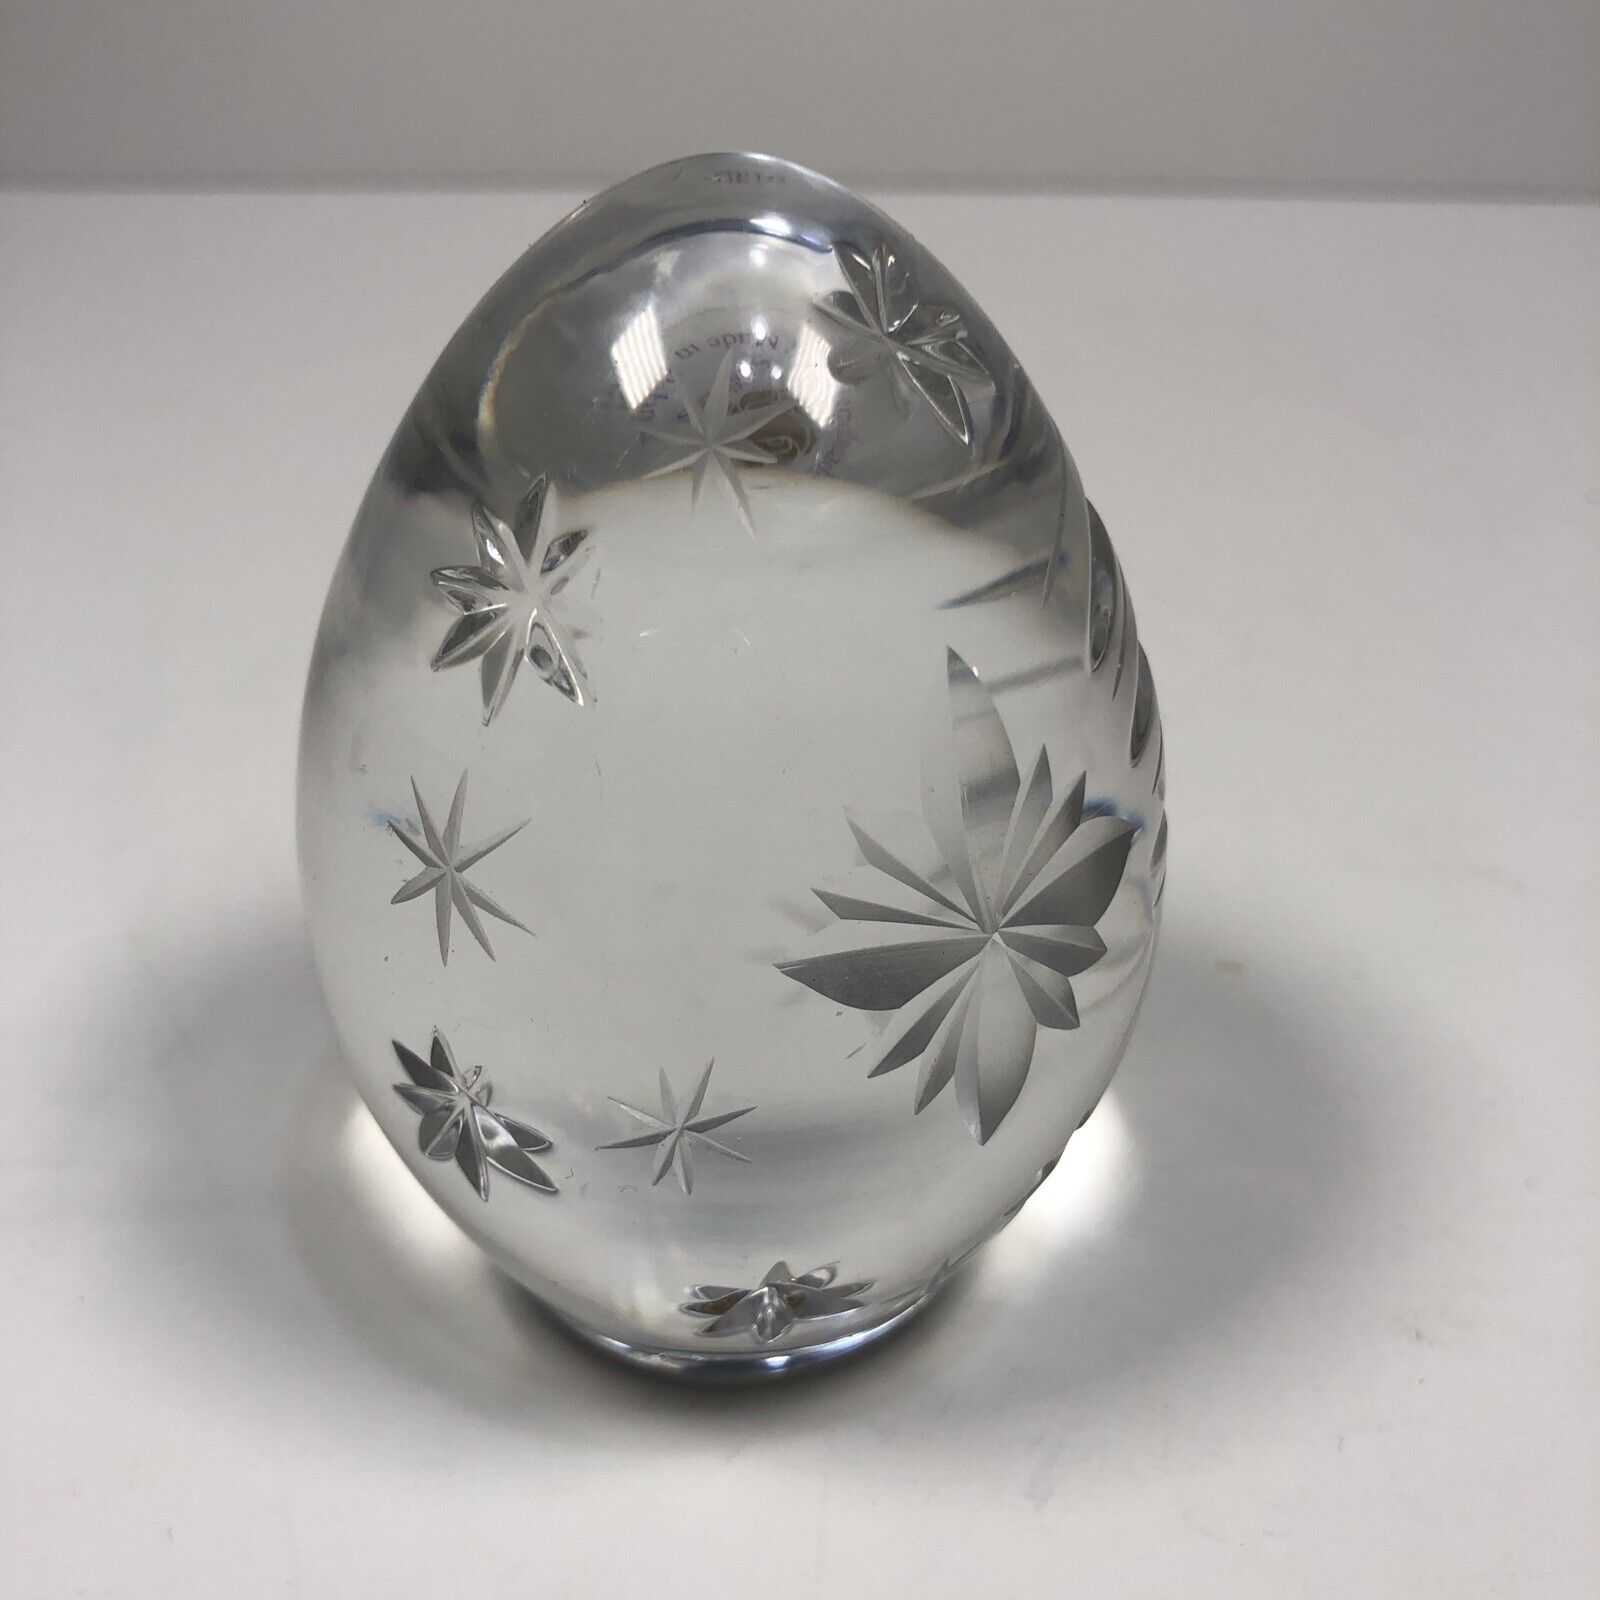 Sullivans Handmade 24% Lead Crystal Egg Paperweight Cut Glass Poland, 2000